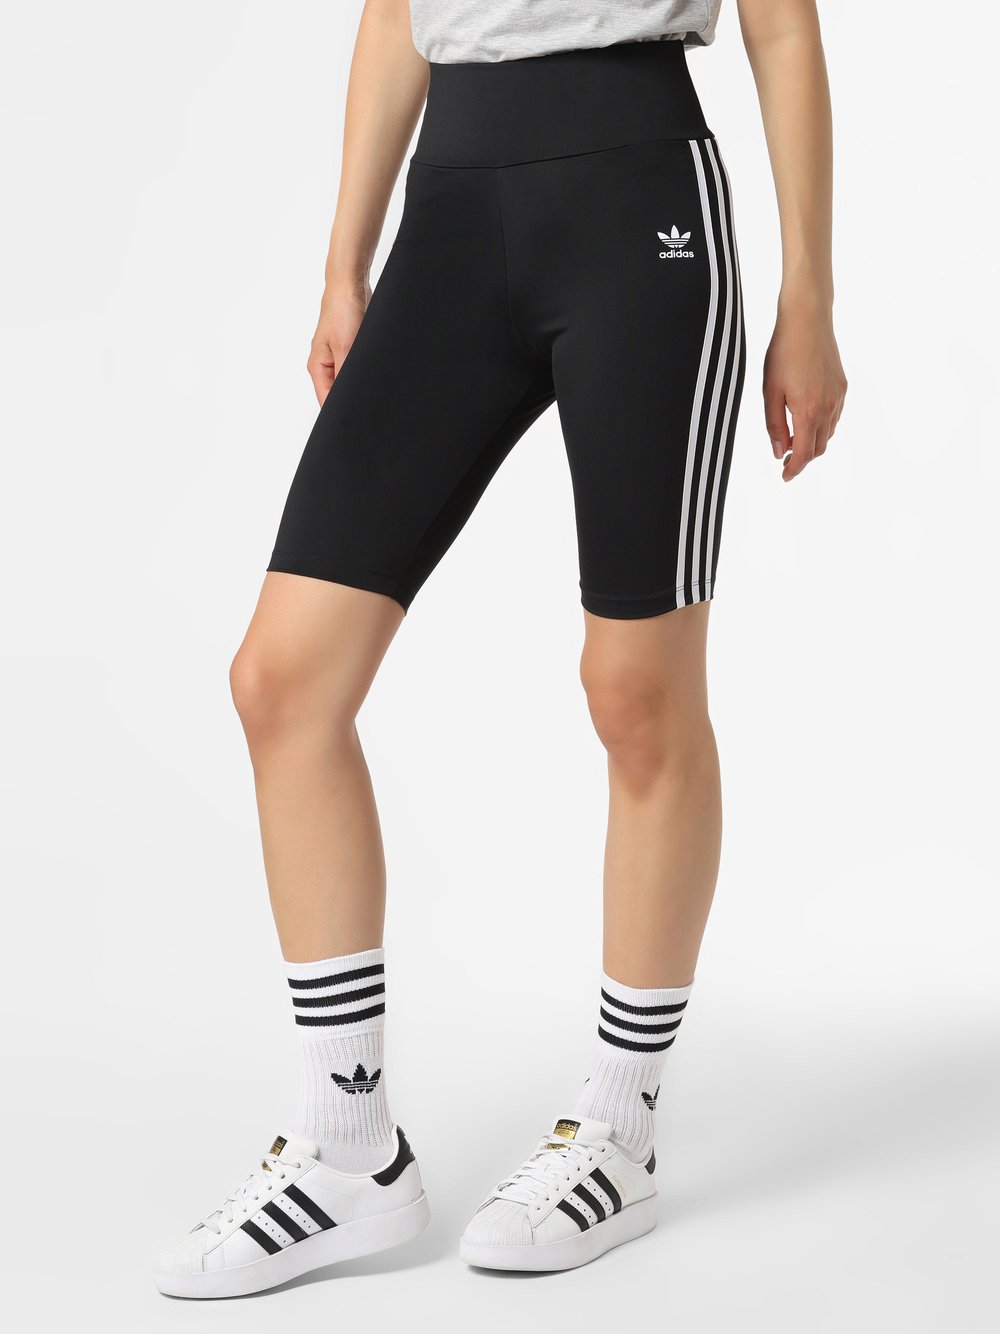 Adidas Originals - Spodenki damskie, czarny